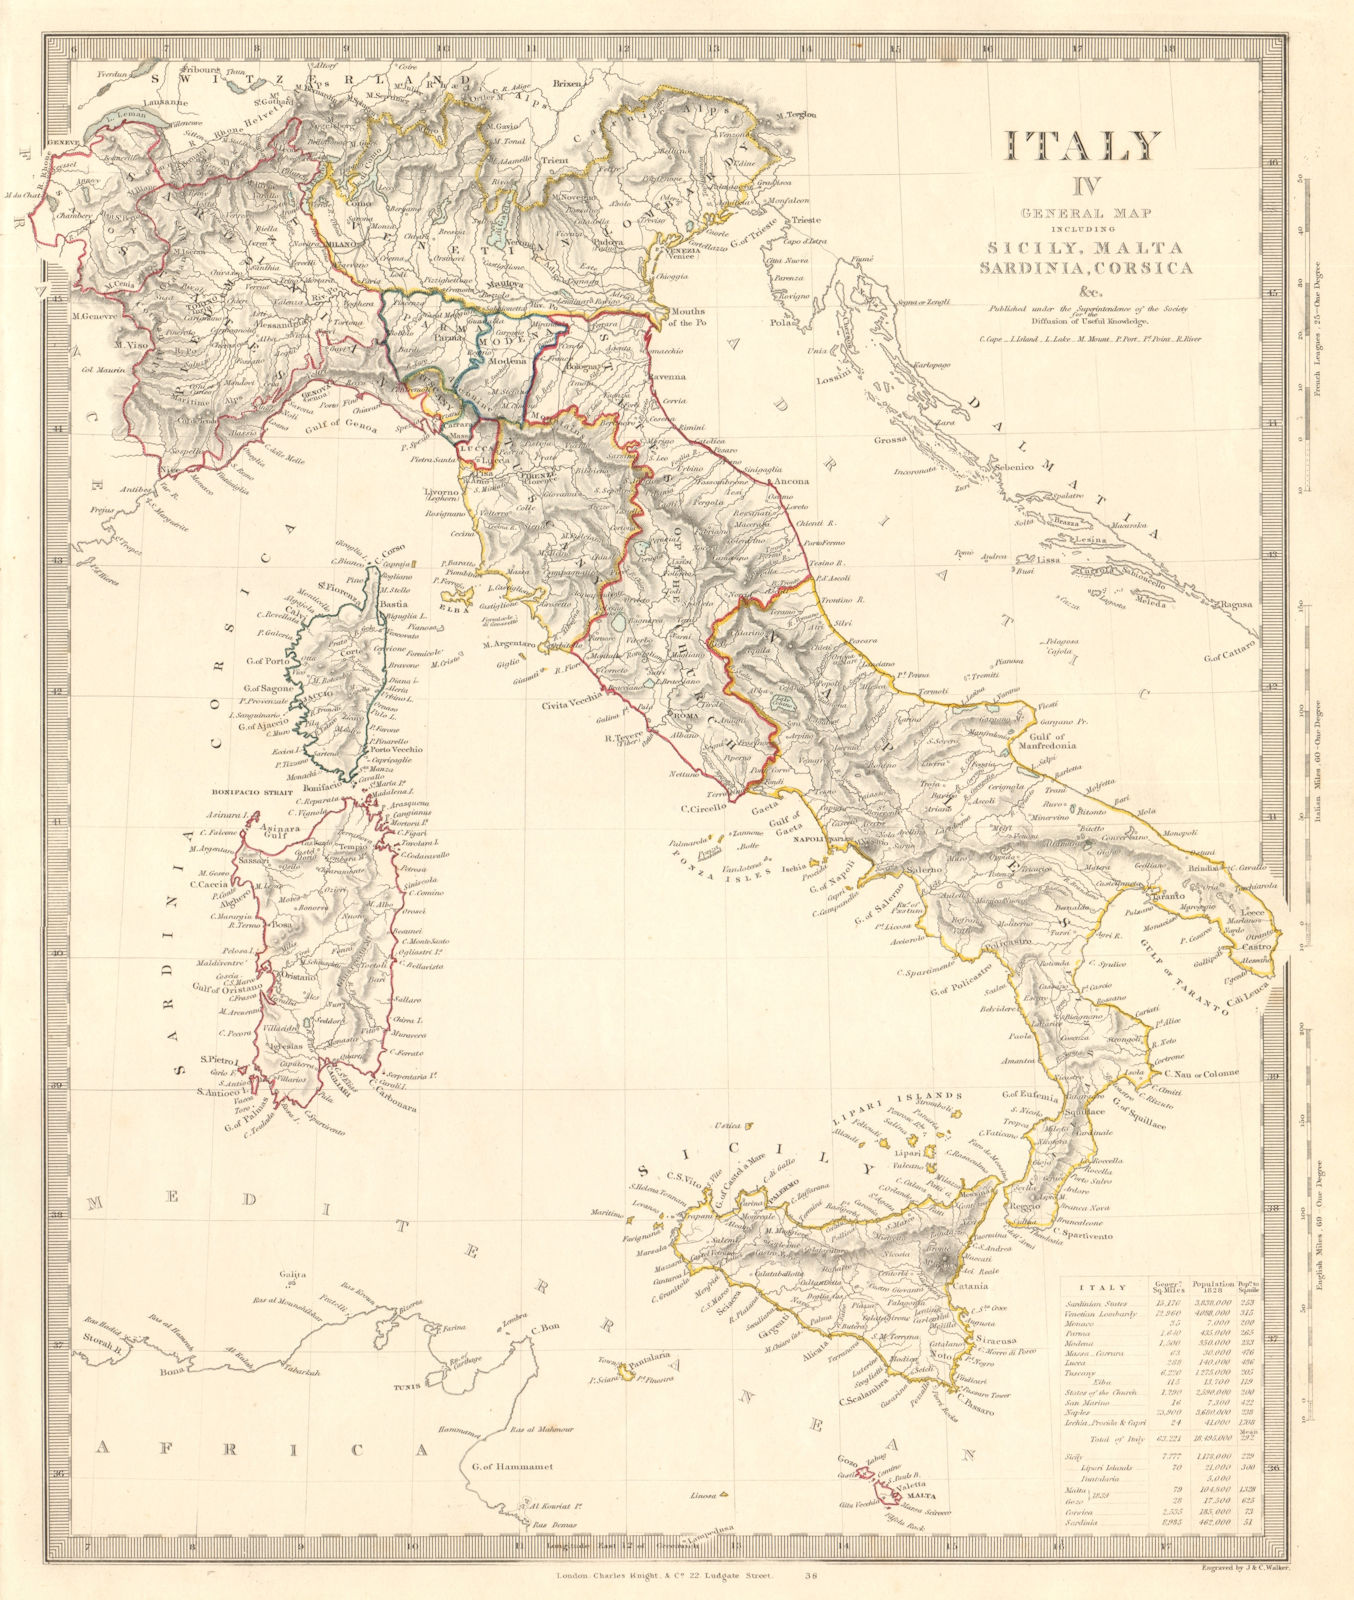 Associate Product ITALY general map. Sicily Sardinia Corsica. Includes Savoie & Nice. SDUK 1845